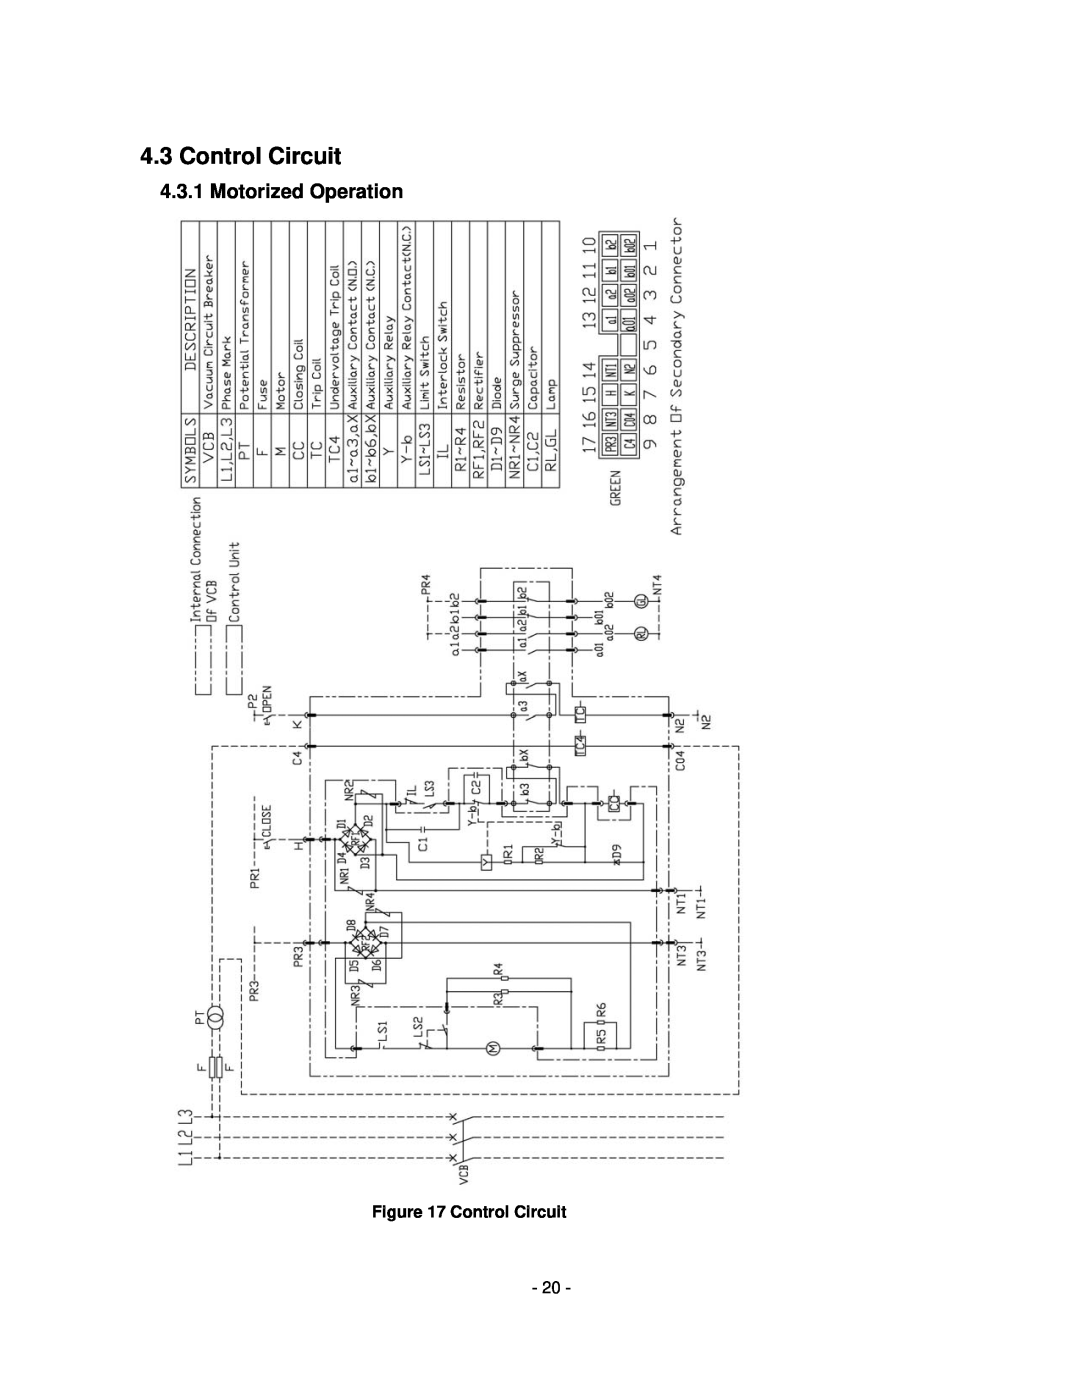 Toshiba HV6CS-MLD, H6A-HLS operation manual Control Circuit, Motorized Operation 